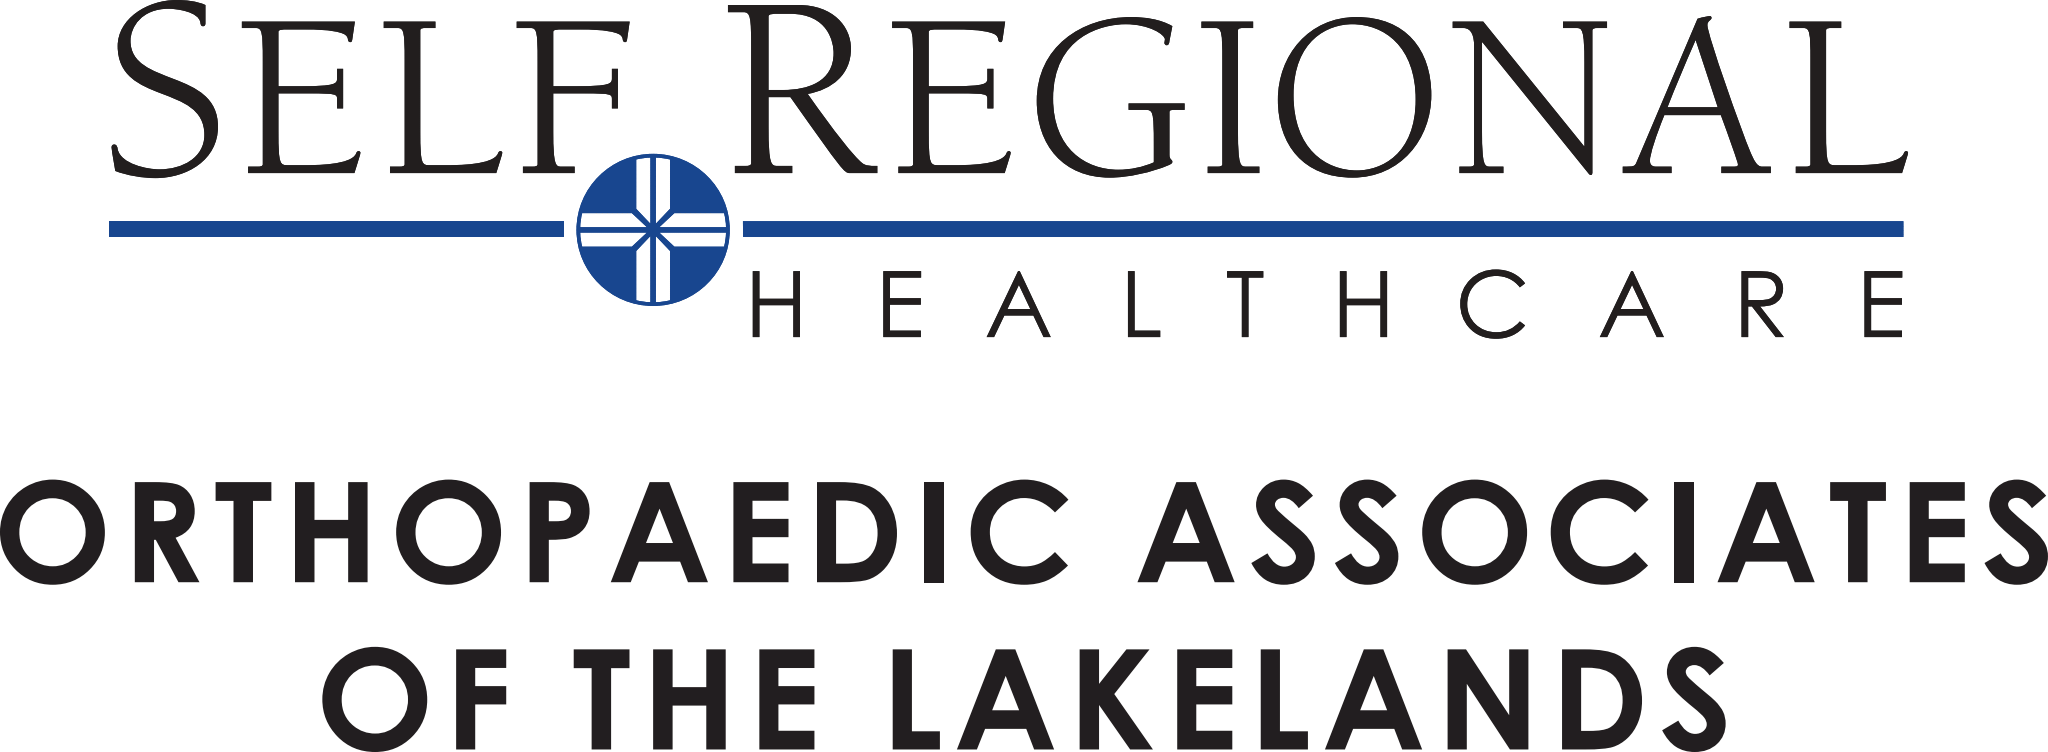 Orthopedic Associates of the Lakelands